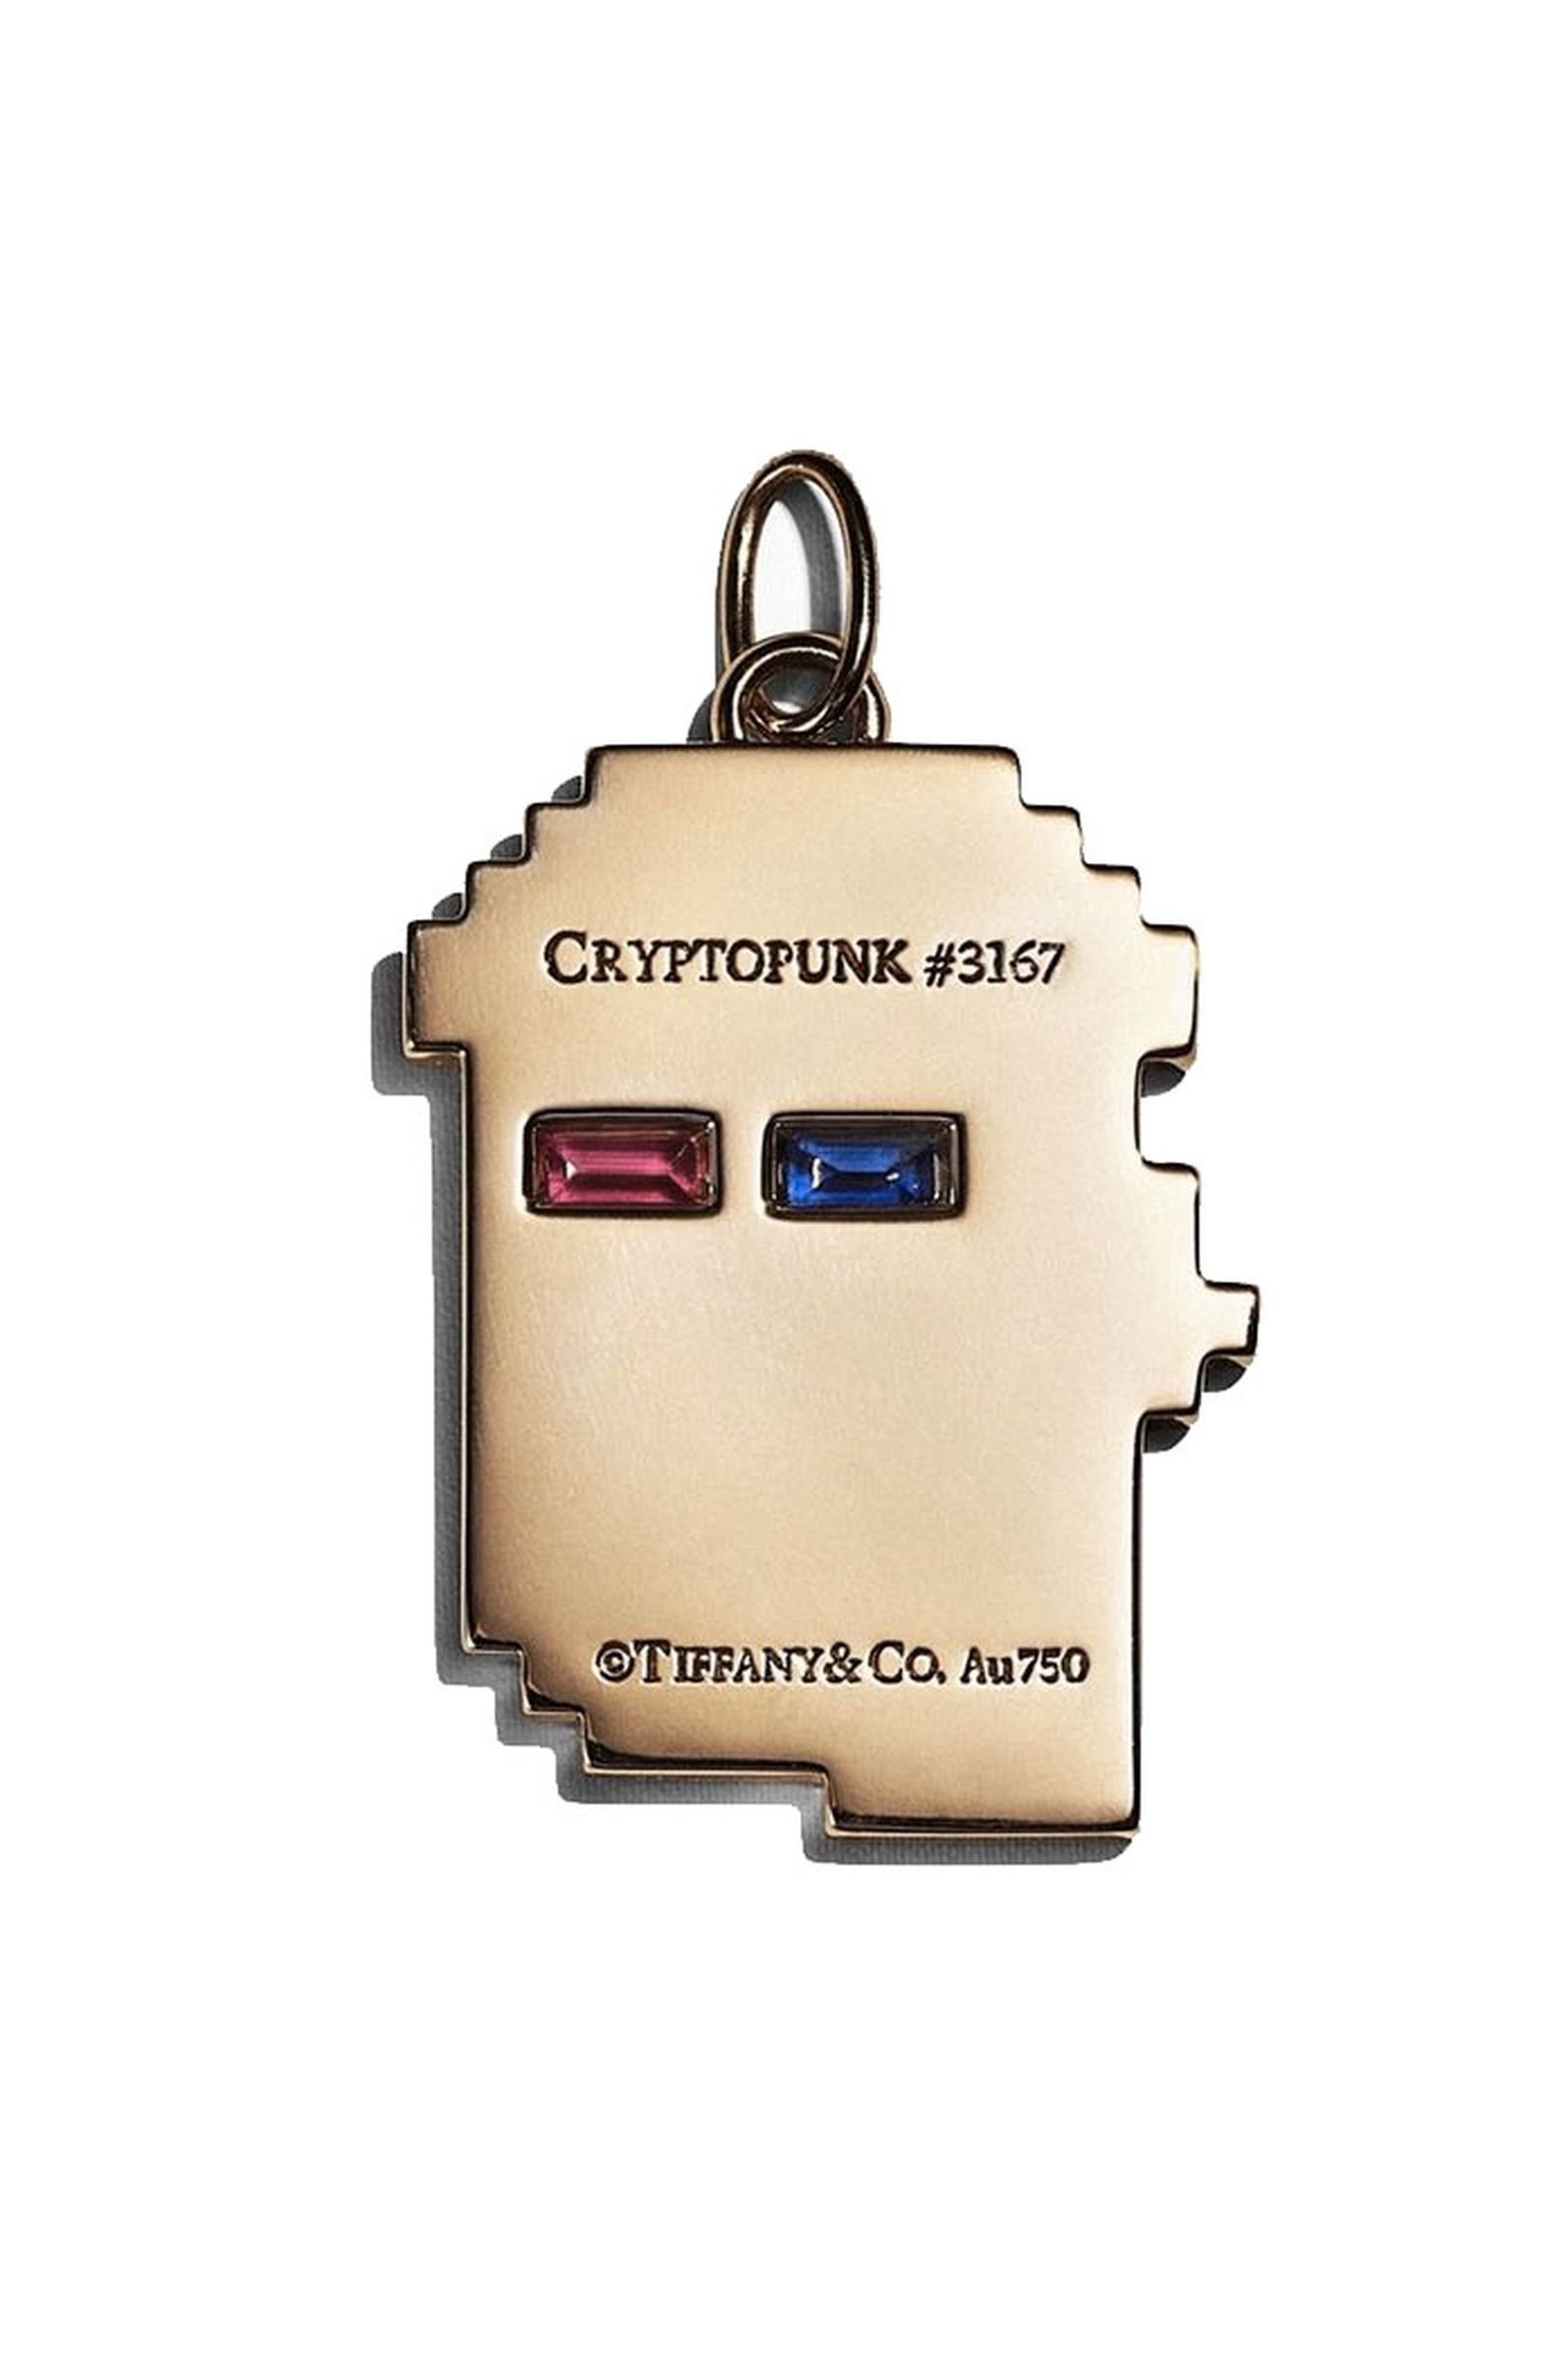 tiffany-co-cryptopunk-pendant-2